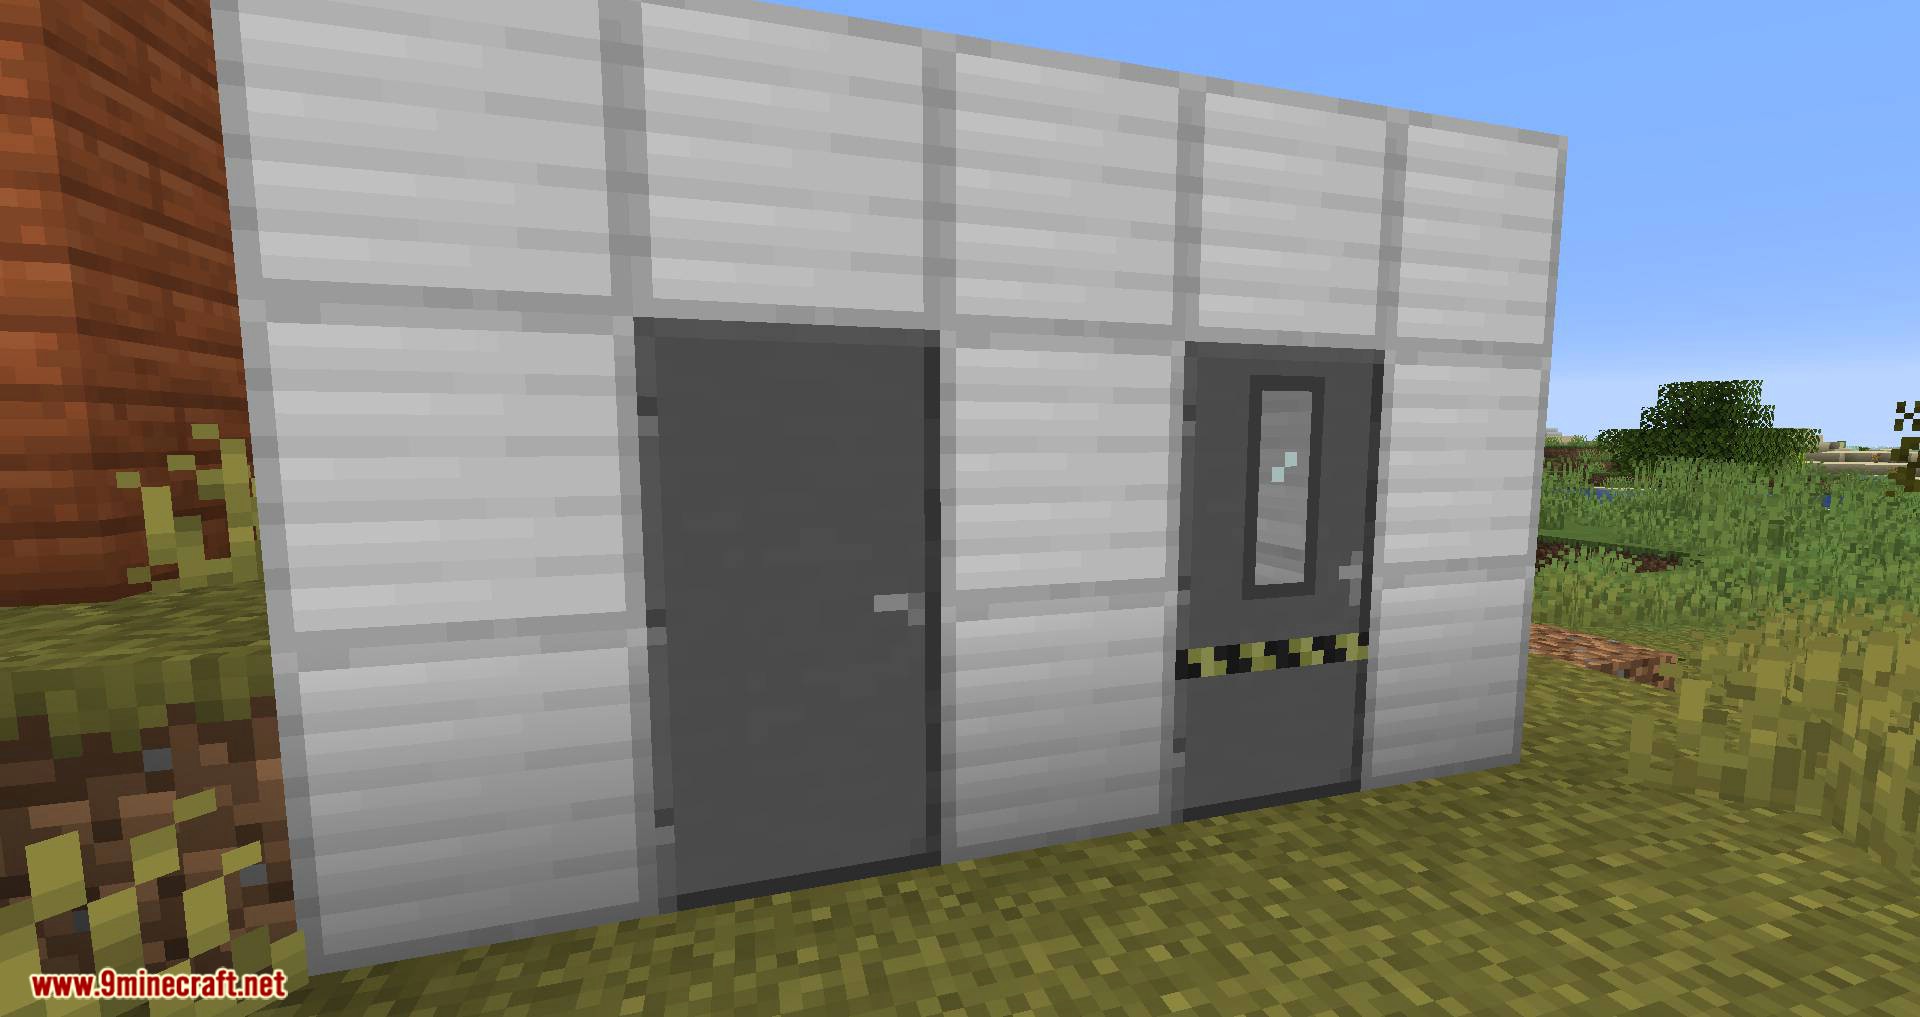 Macaw_s Doors mod for minecraft 08